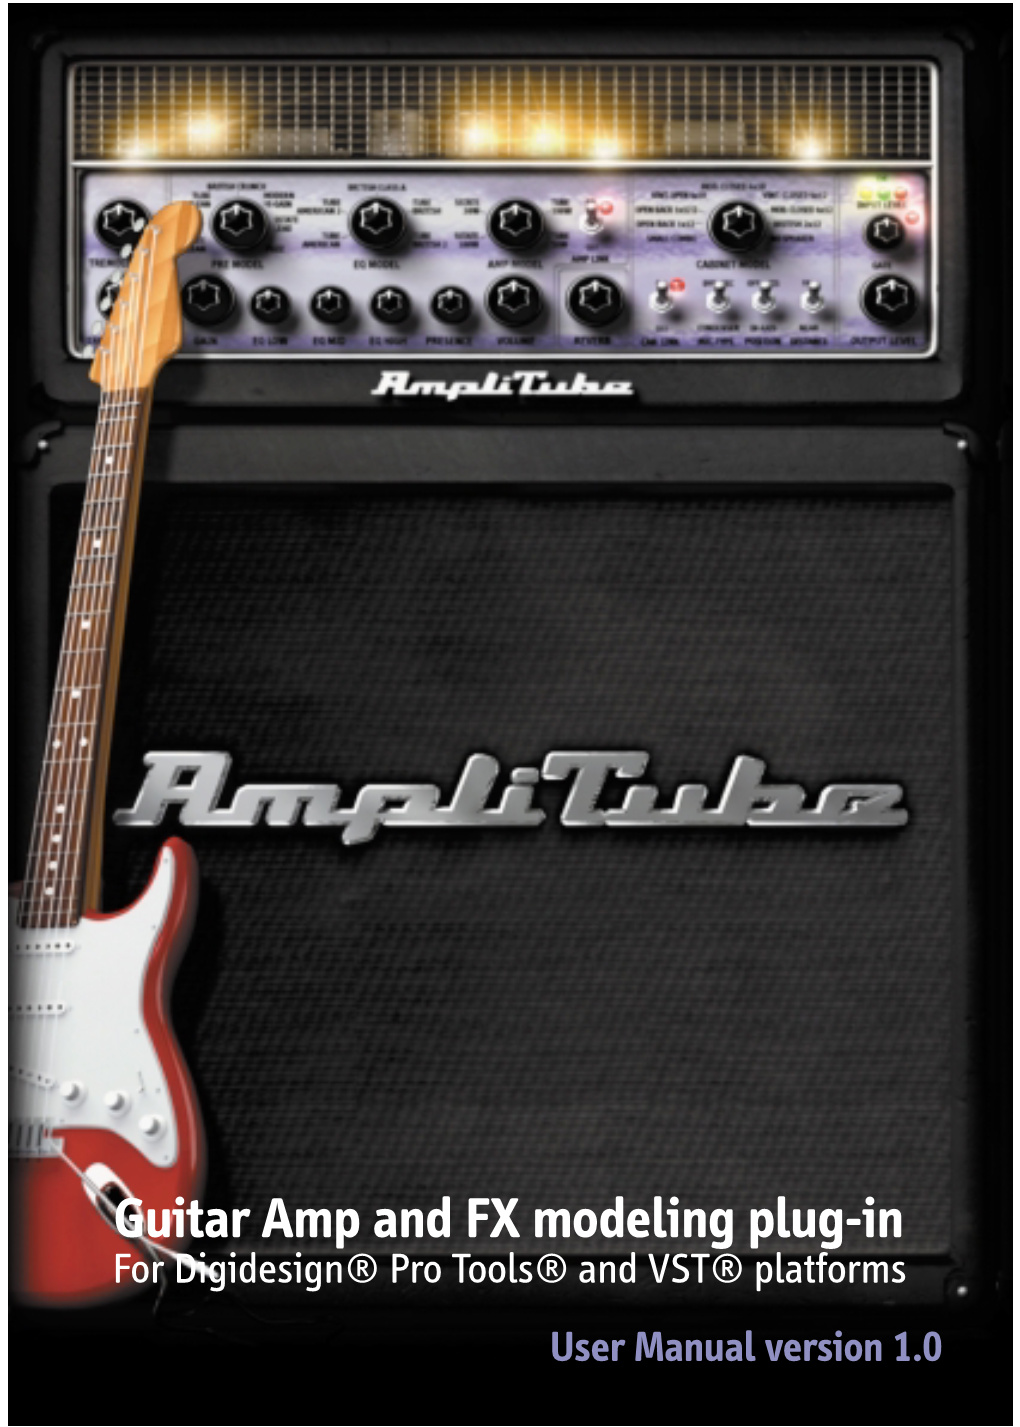 Guitar Amp and FX Modeling Plug-In for Digidesign® Pro Tools® and VST® Platforms User Manual Version 1.0